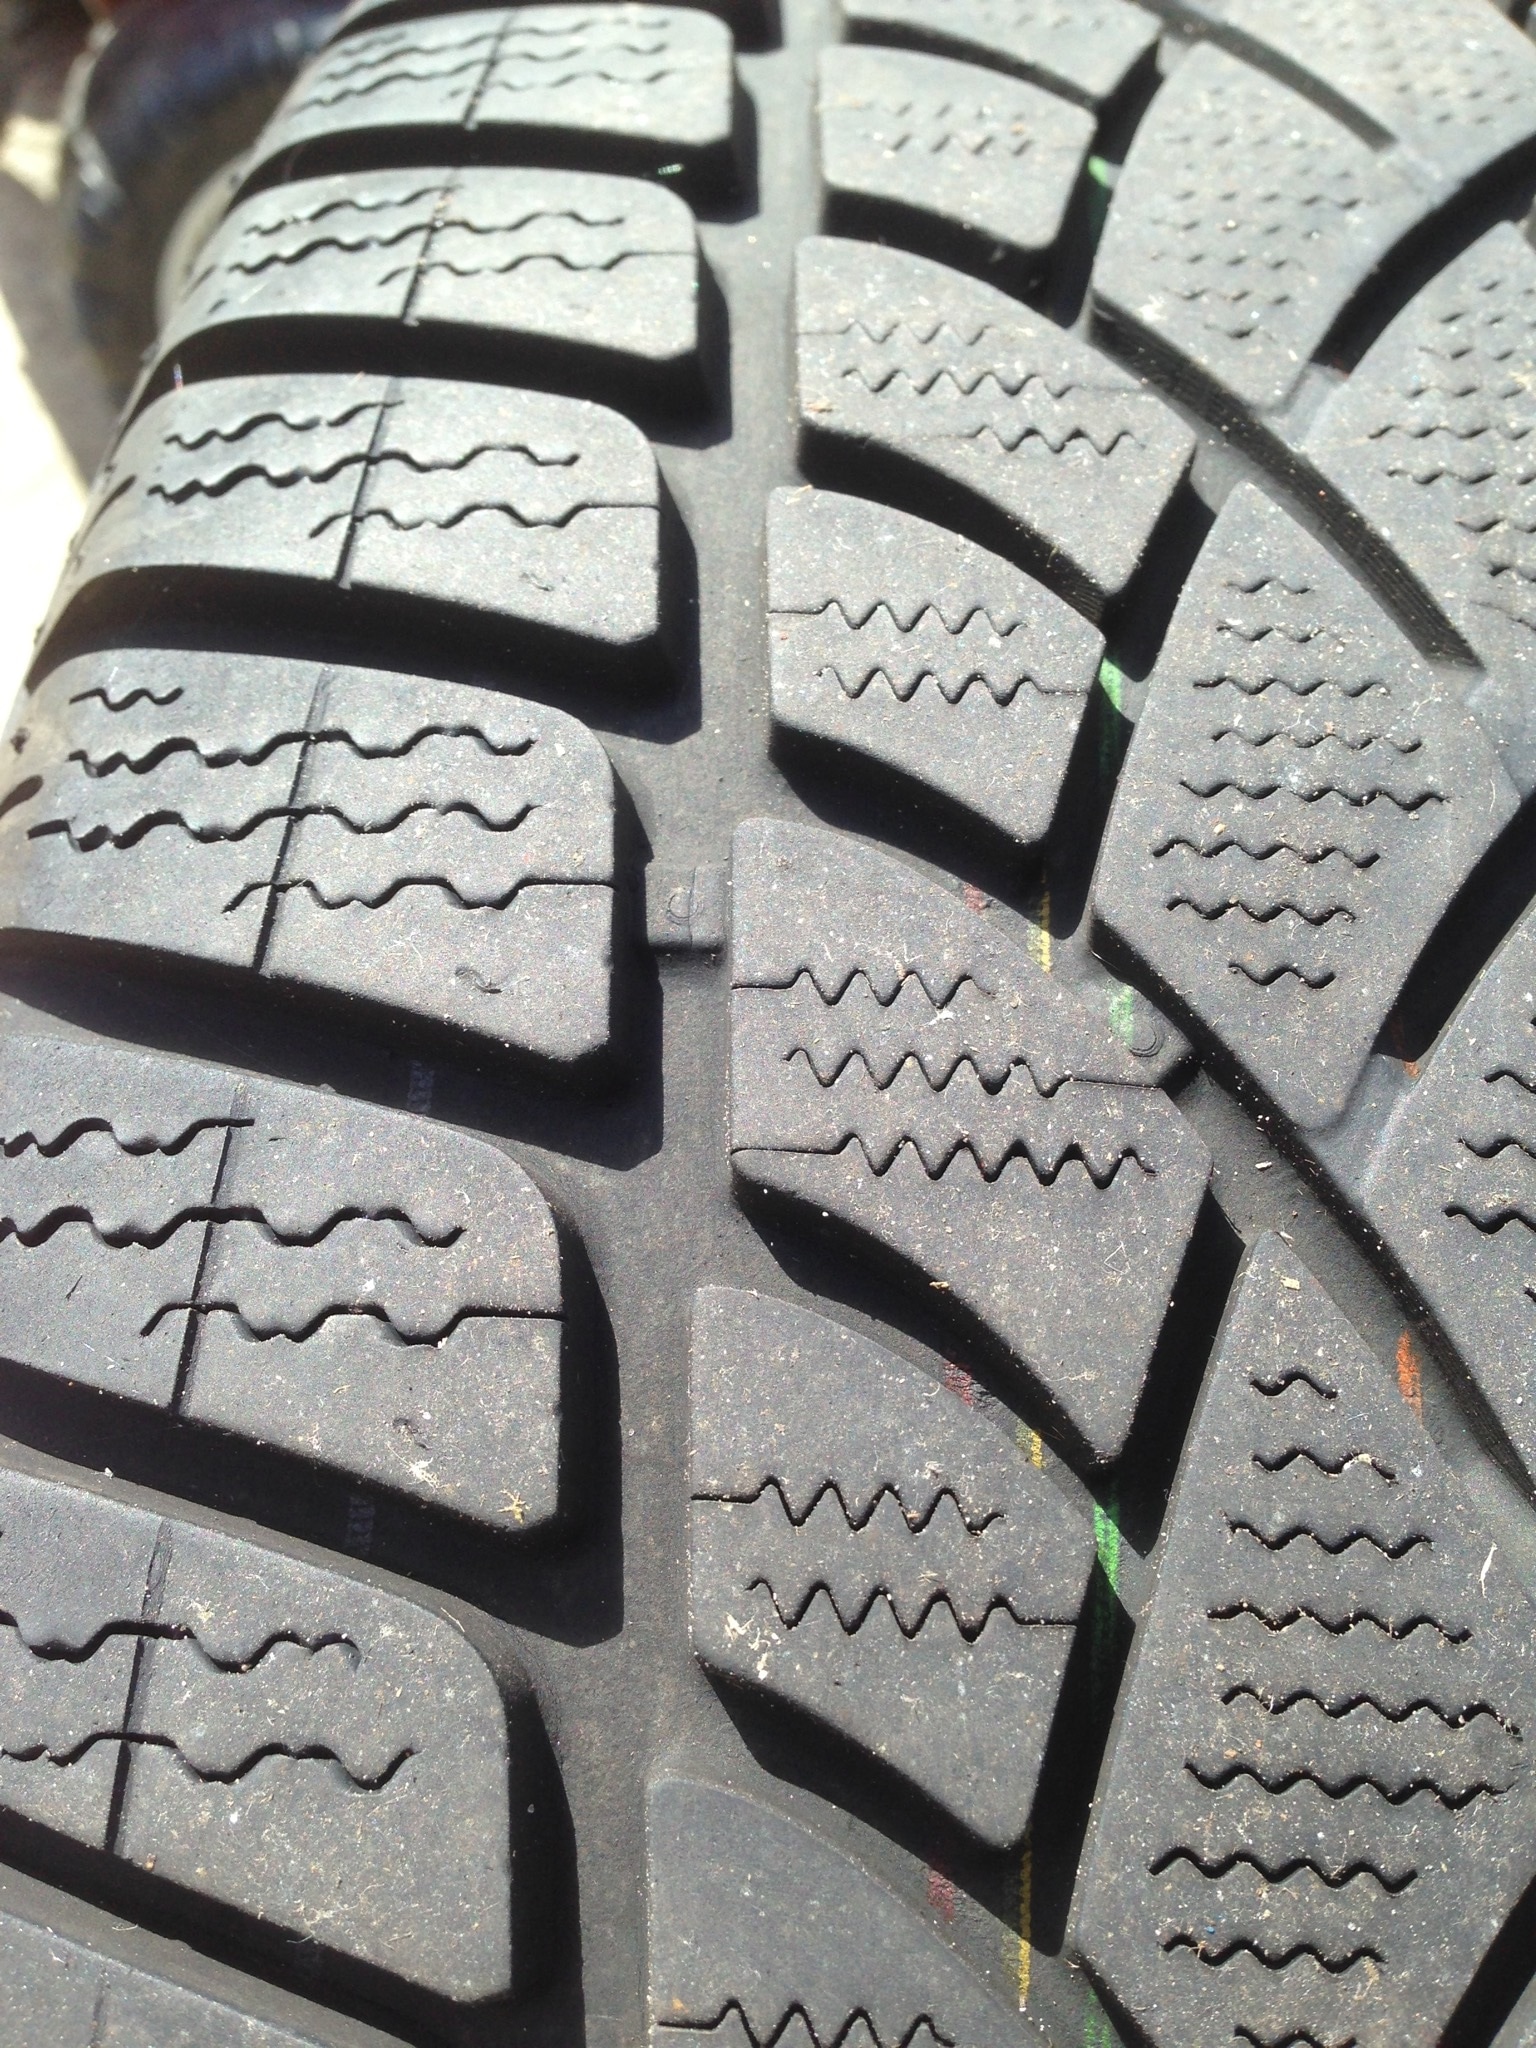 automotive radial tire